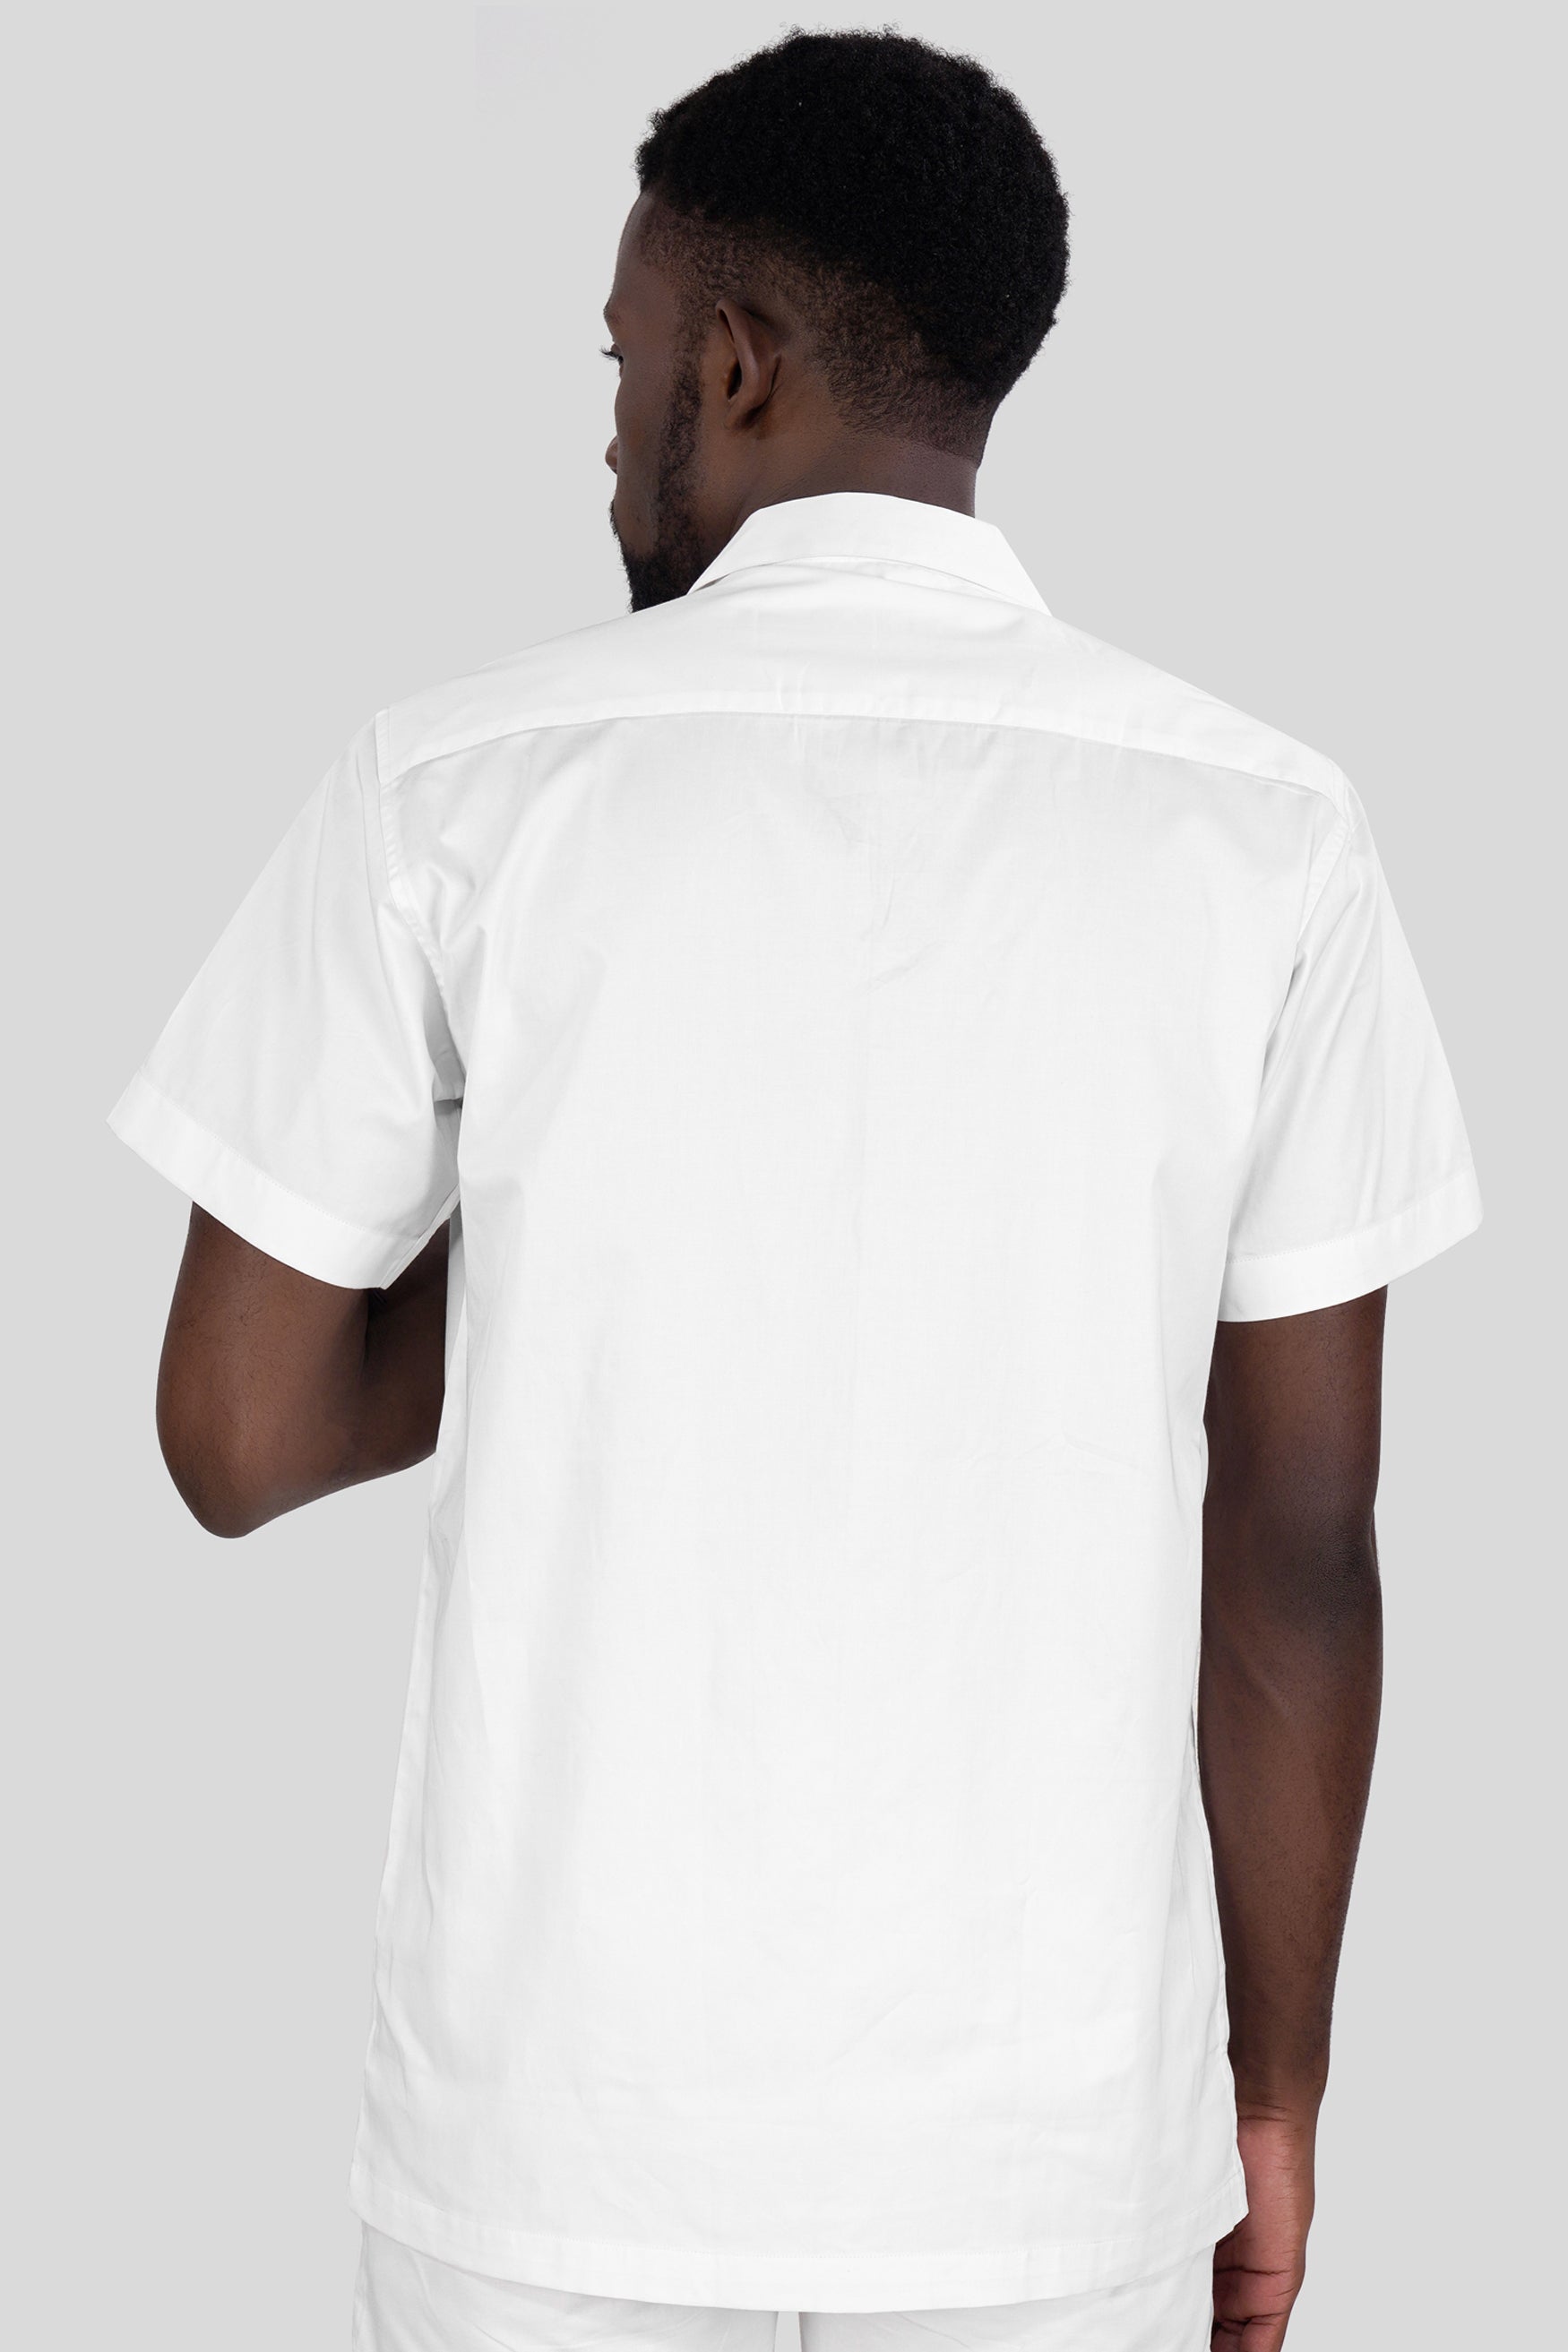 Bright White Premium Cotton Half Sleeved Shirt 11996-CC-SS-38, 11996-CC-SS-39, 11996-CC-SS-40, 11996-CC-SS-42, 11996-CC-SS-44, 11996-CC-SS-46, 11996-CC-SS-48, 11996-CC-SS-50, 11996-CC-SS-52